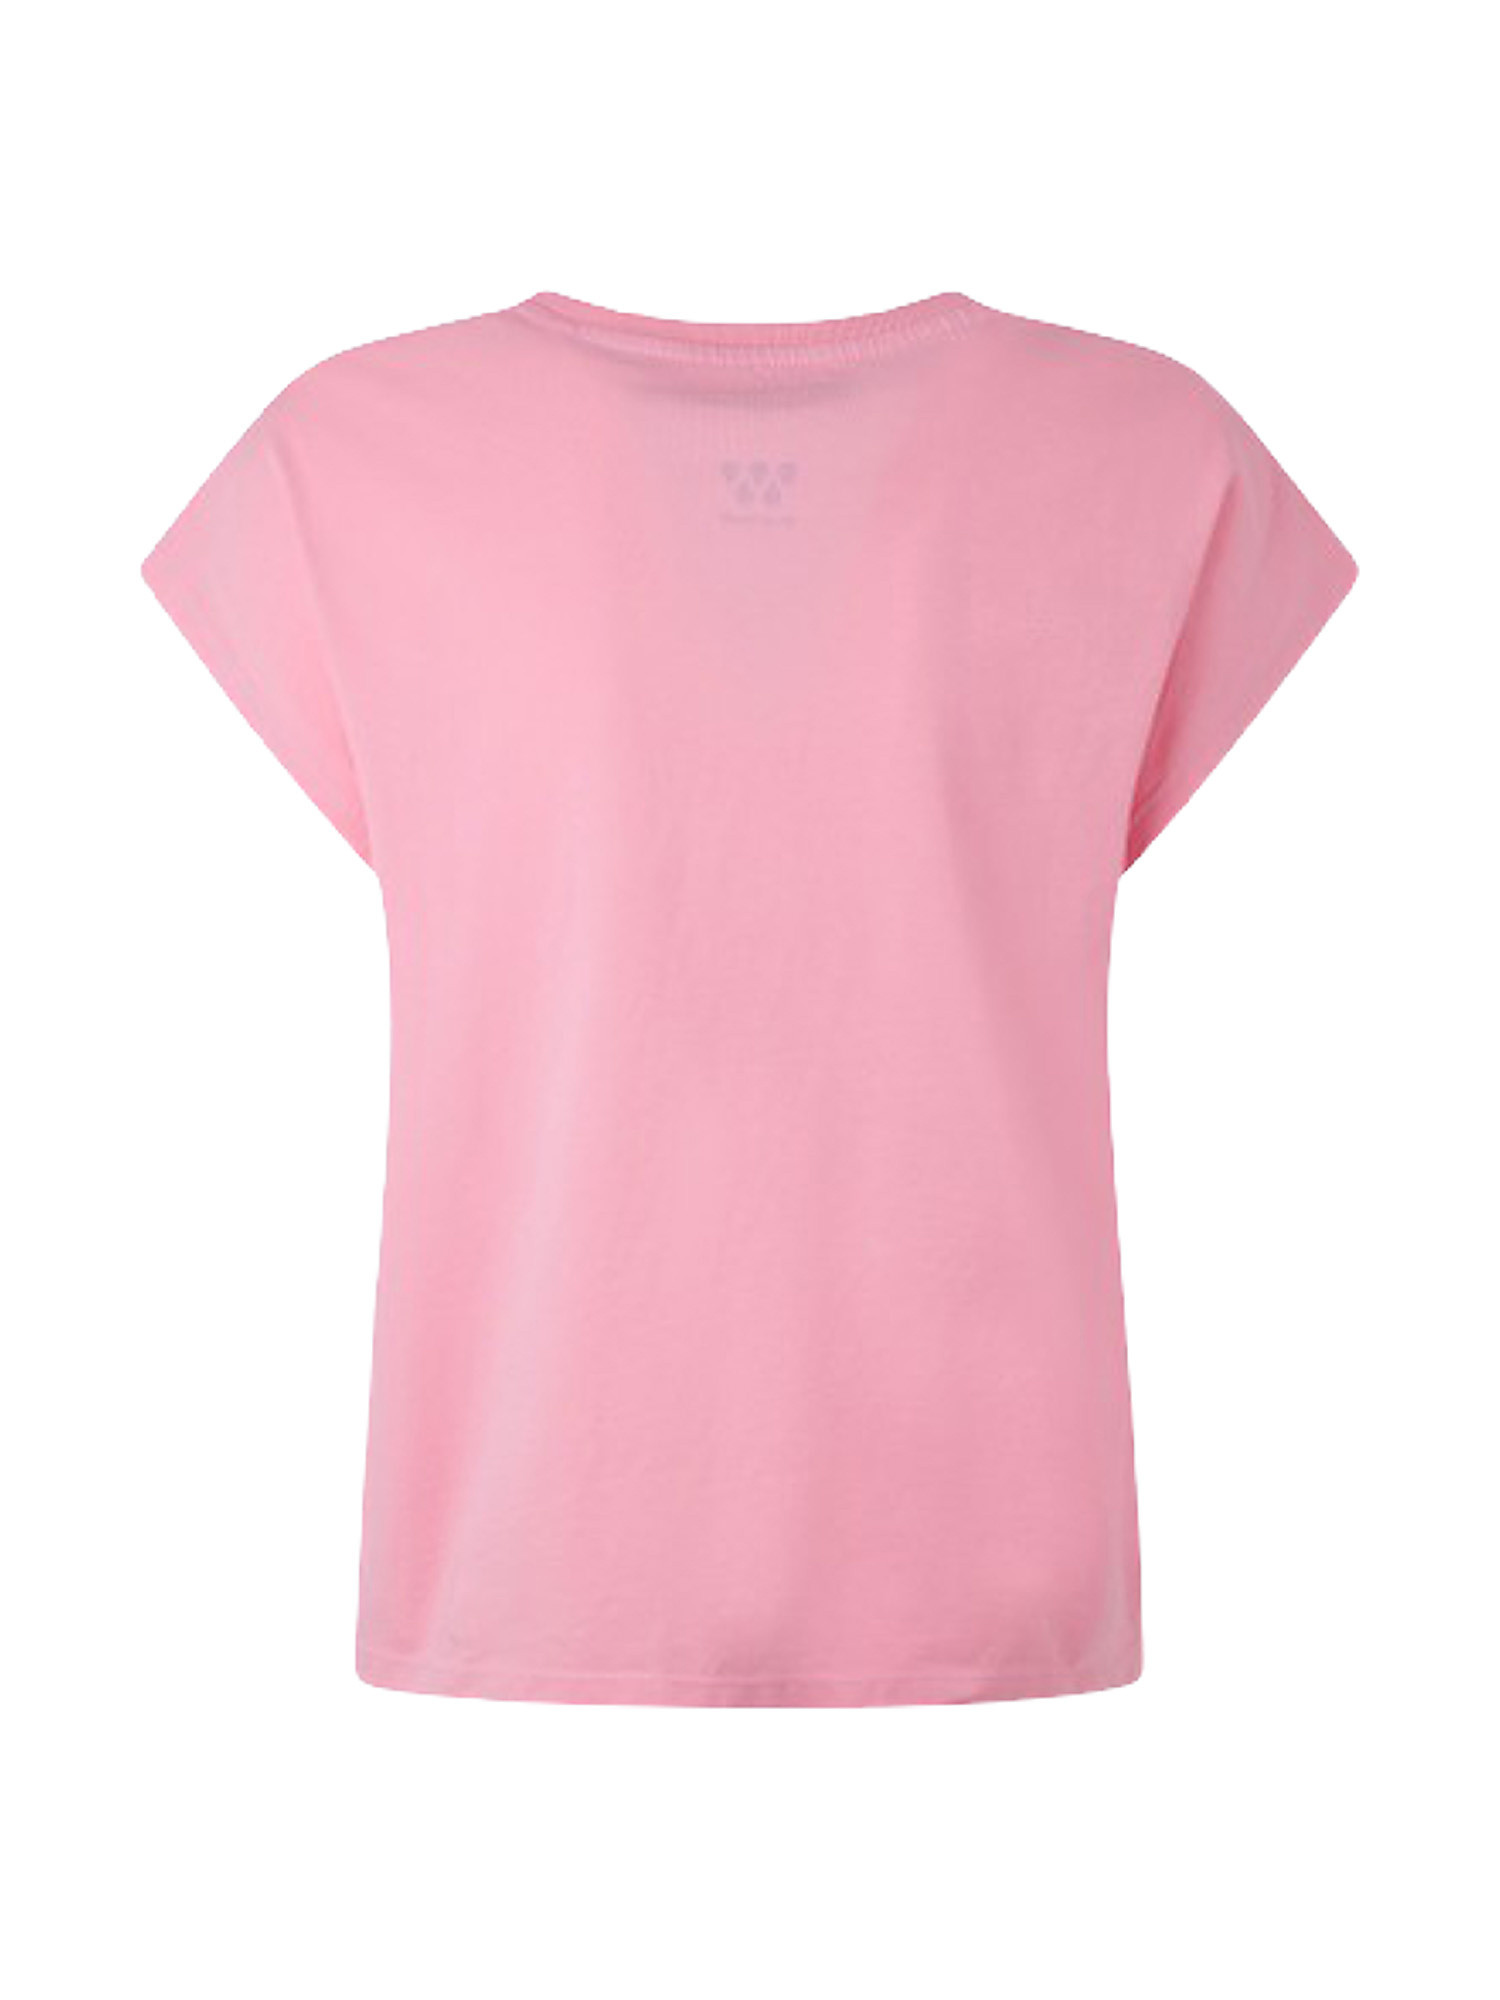 T-shirt con stampa testo effetto consumato rosie, Rosa, large image number 1